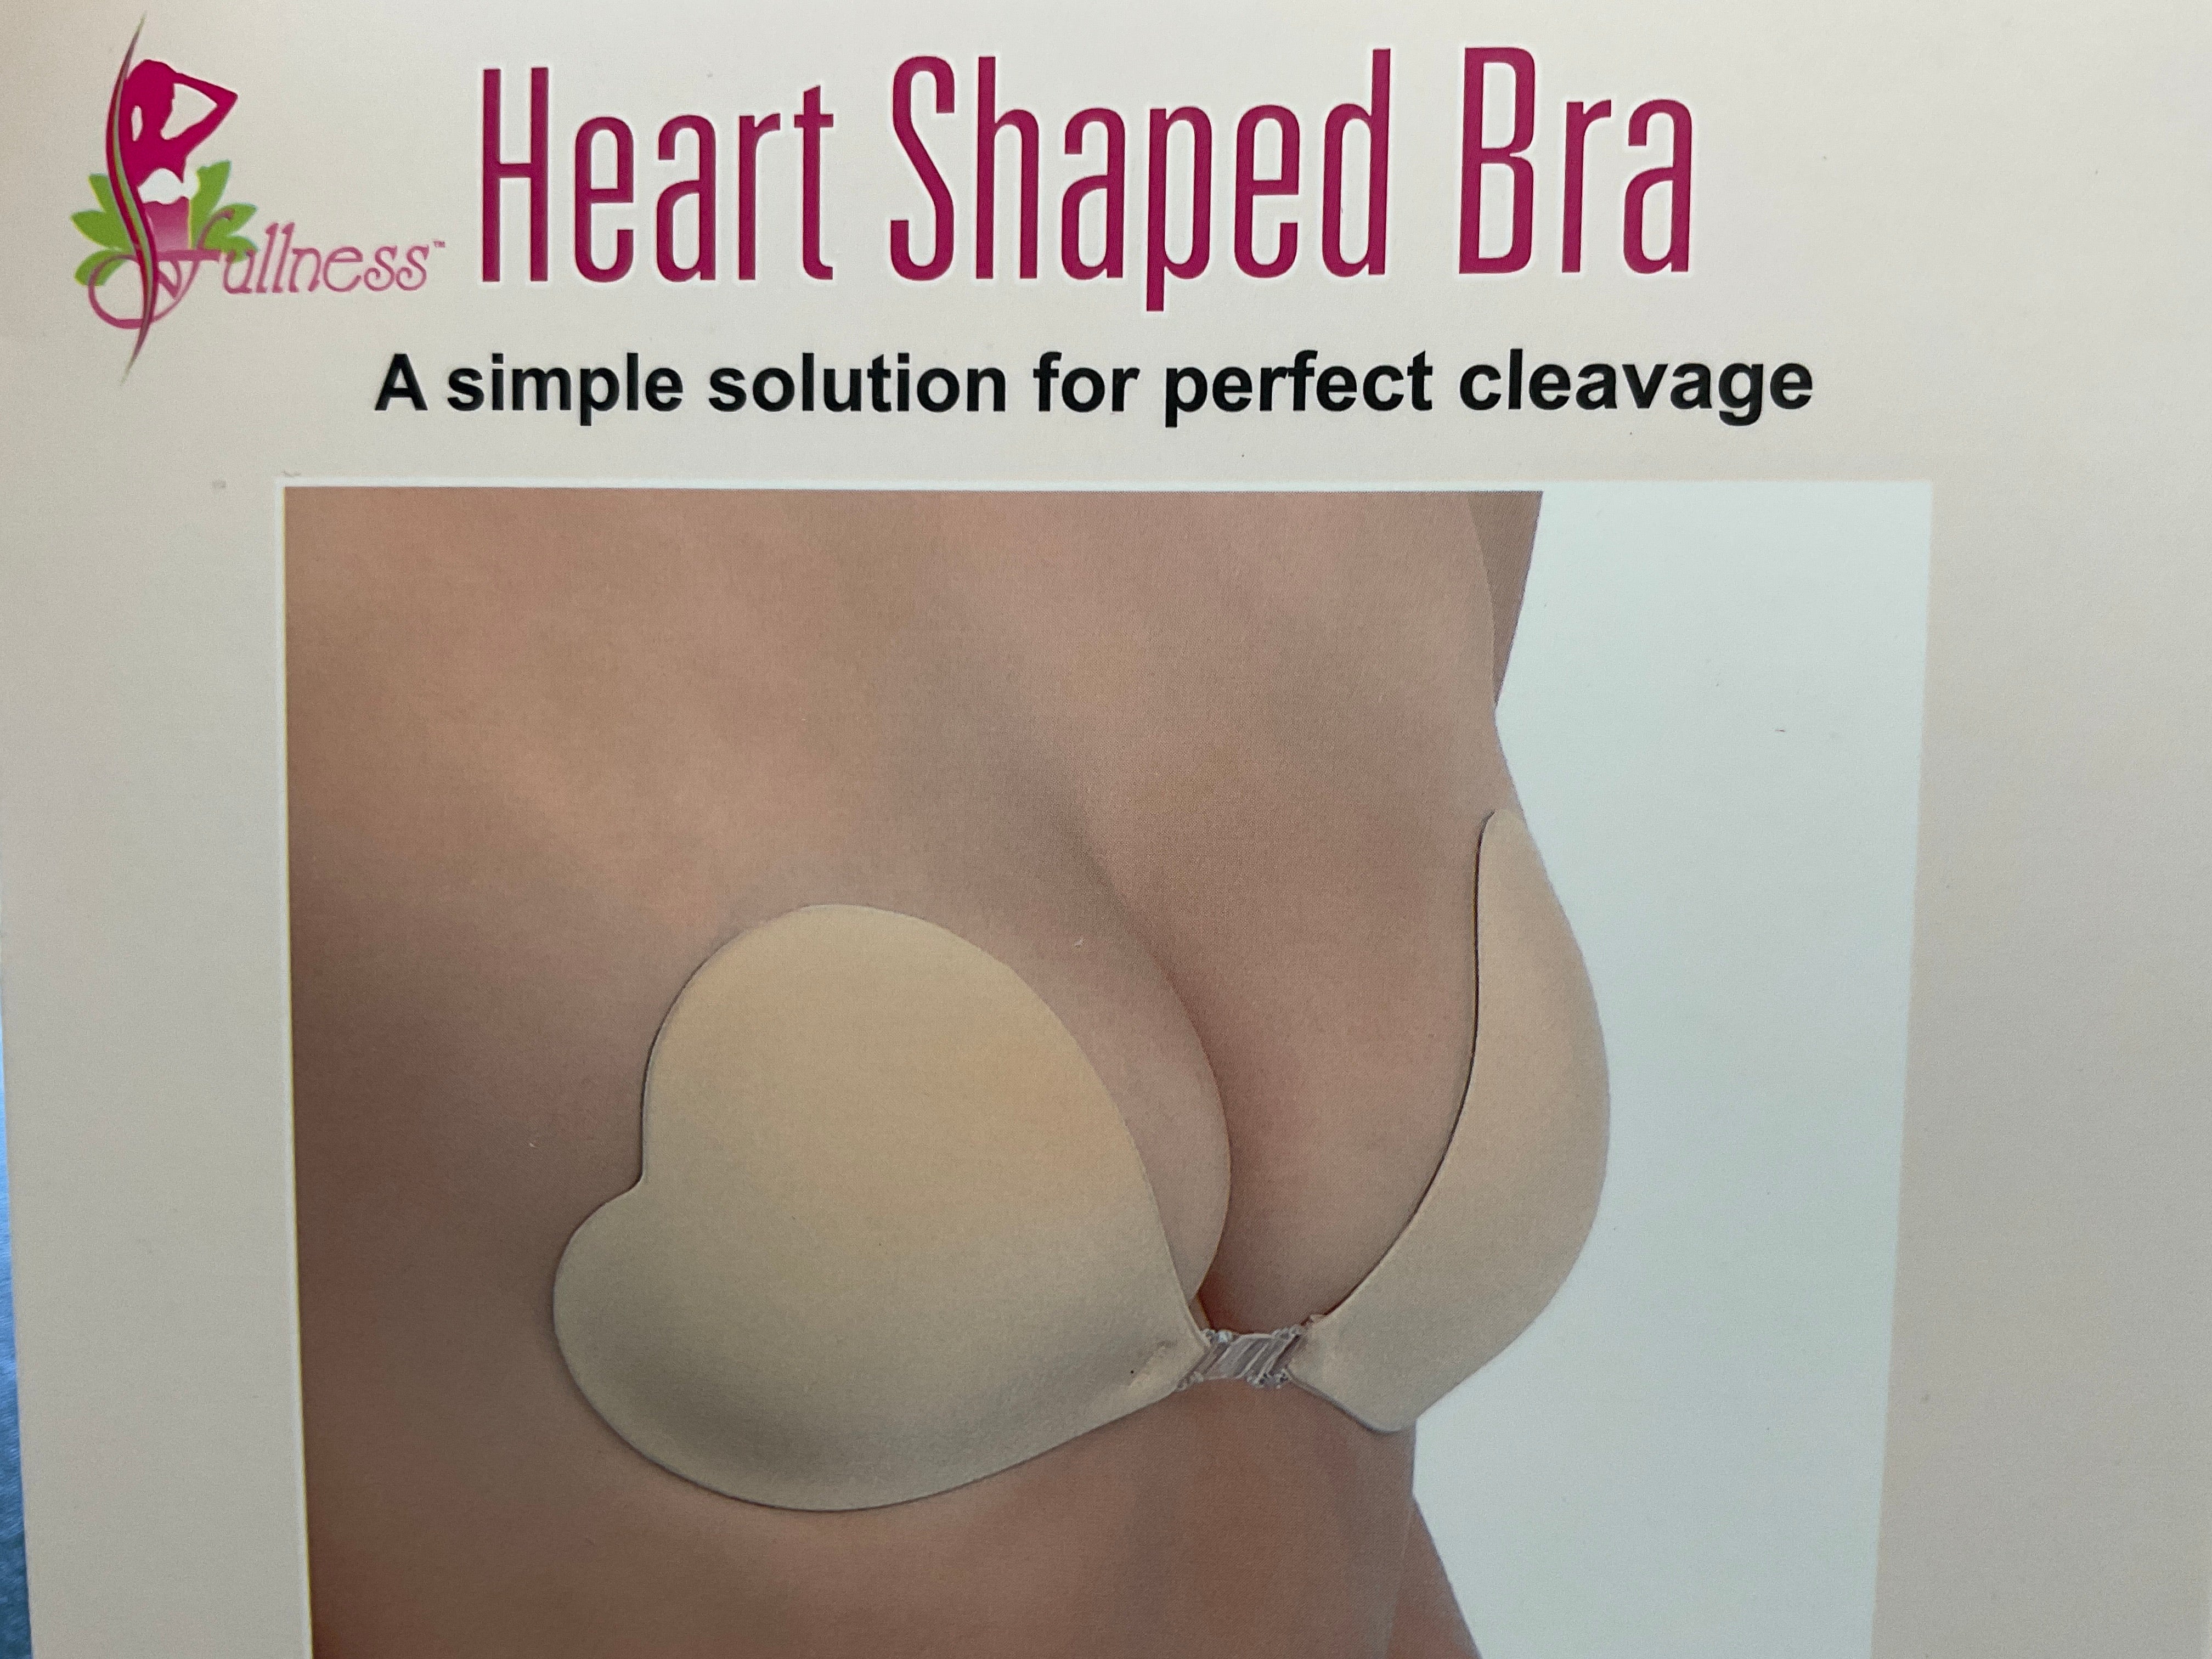 Heart shaped bra – Gali Company